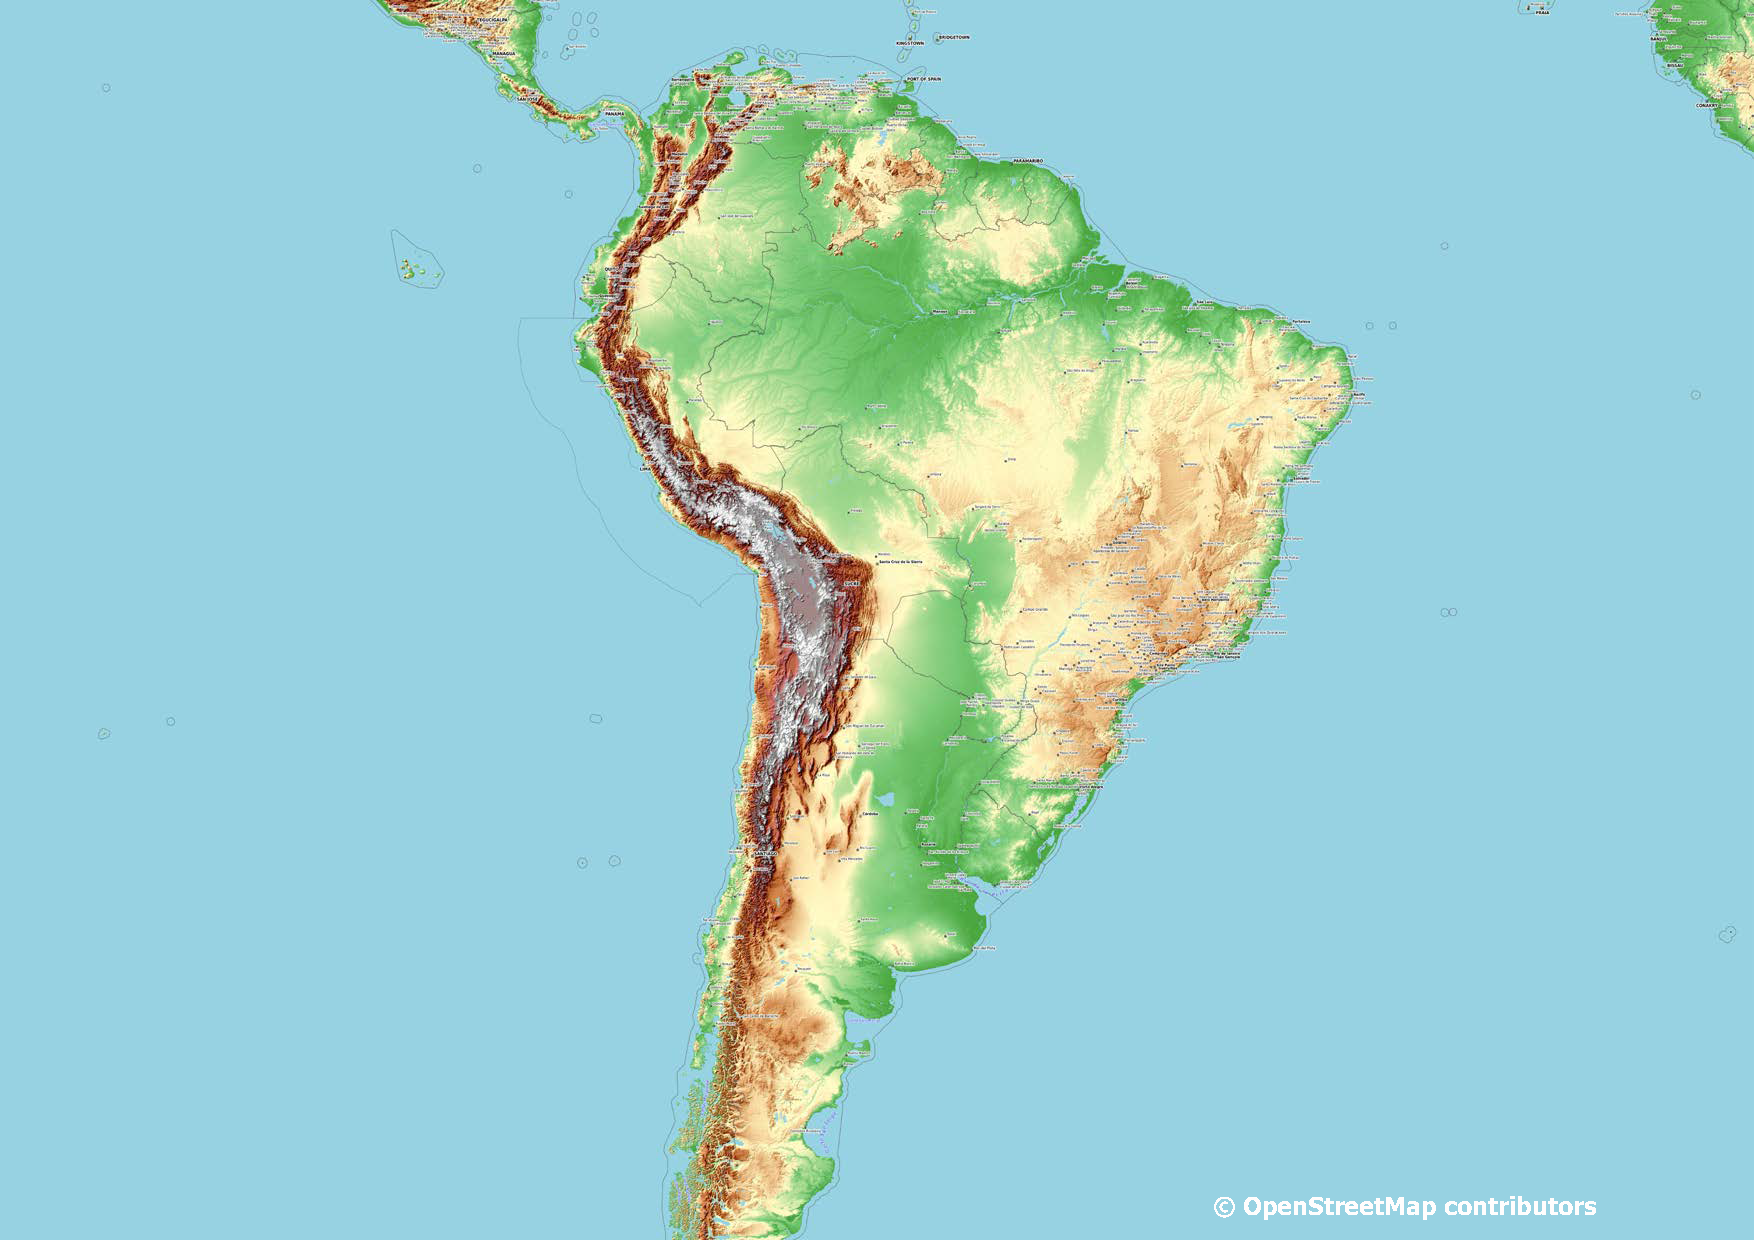 Mapa d’Amèrica del Sud